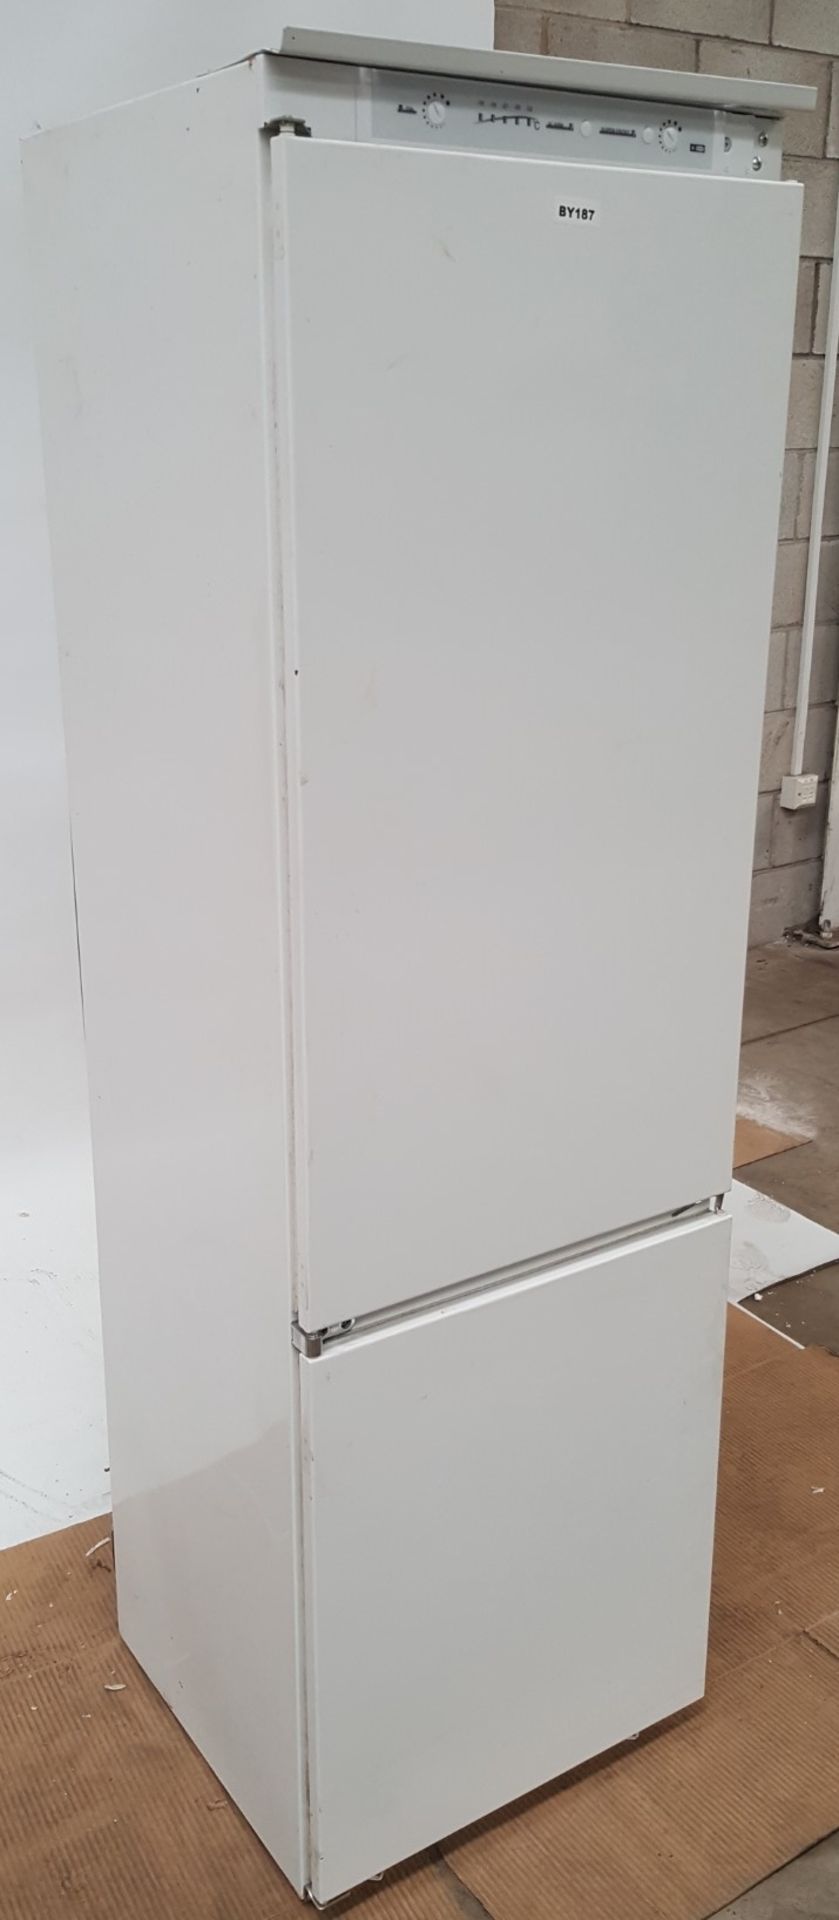 1 x Prima Integrated 70/30 Frost Free Fridge Freezer LPR472A1 - Ref BY187